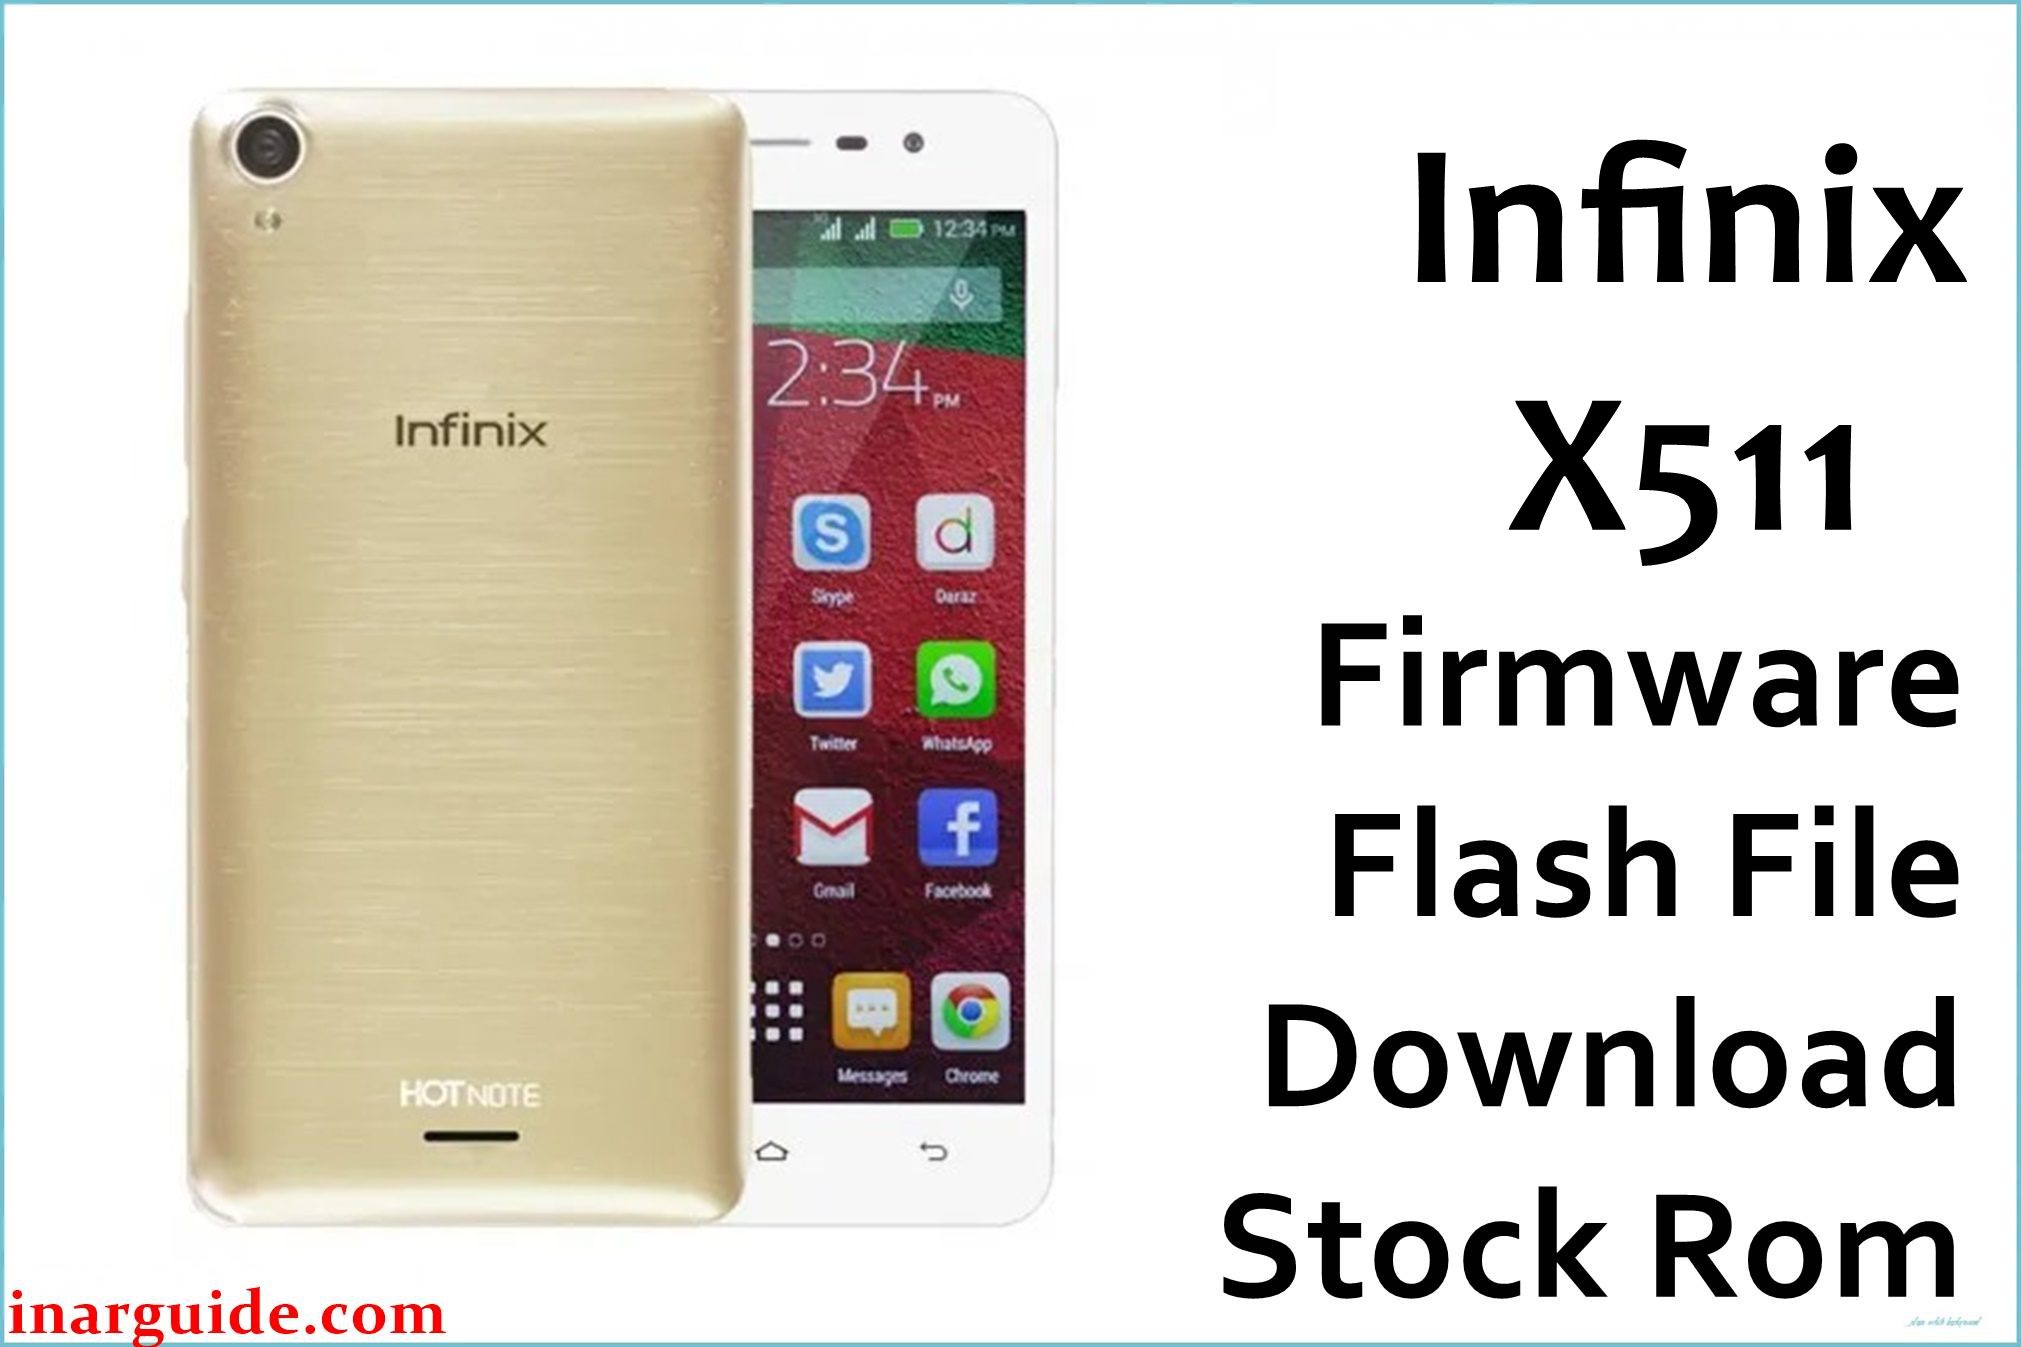 Infinix X511